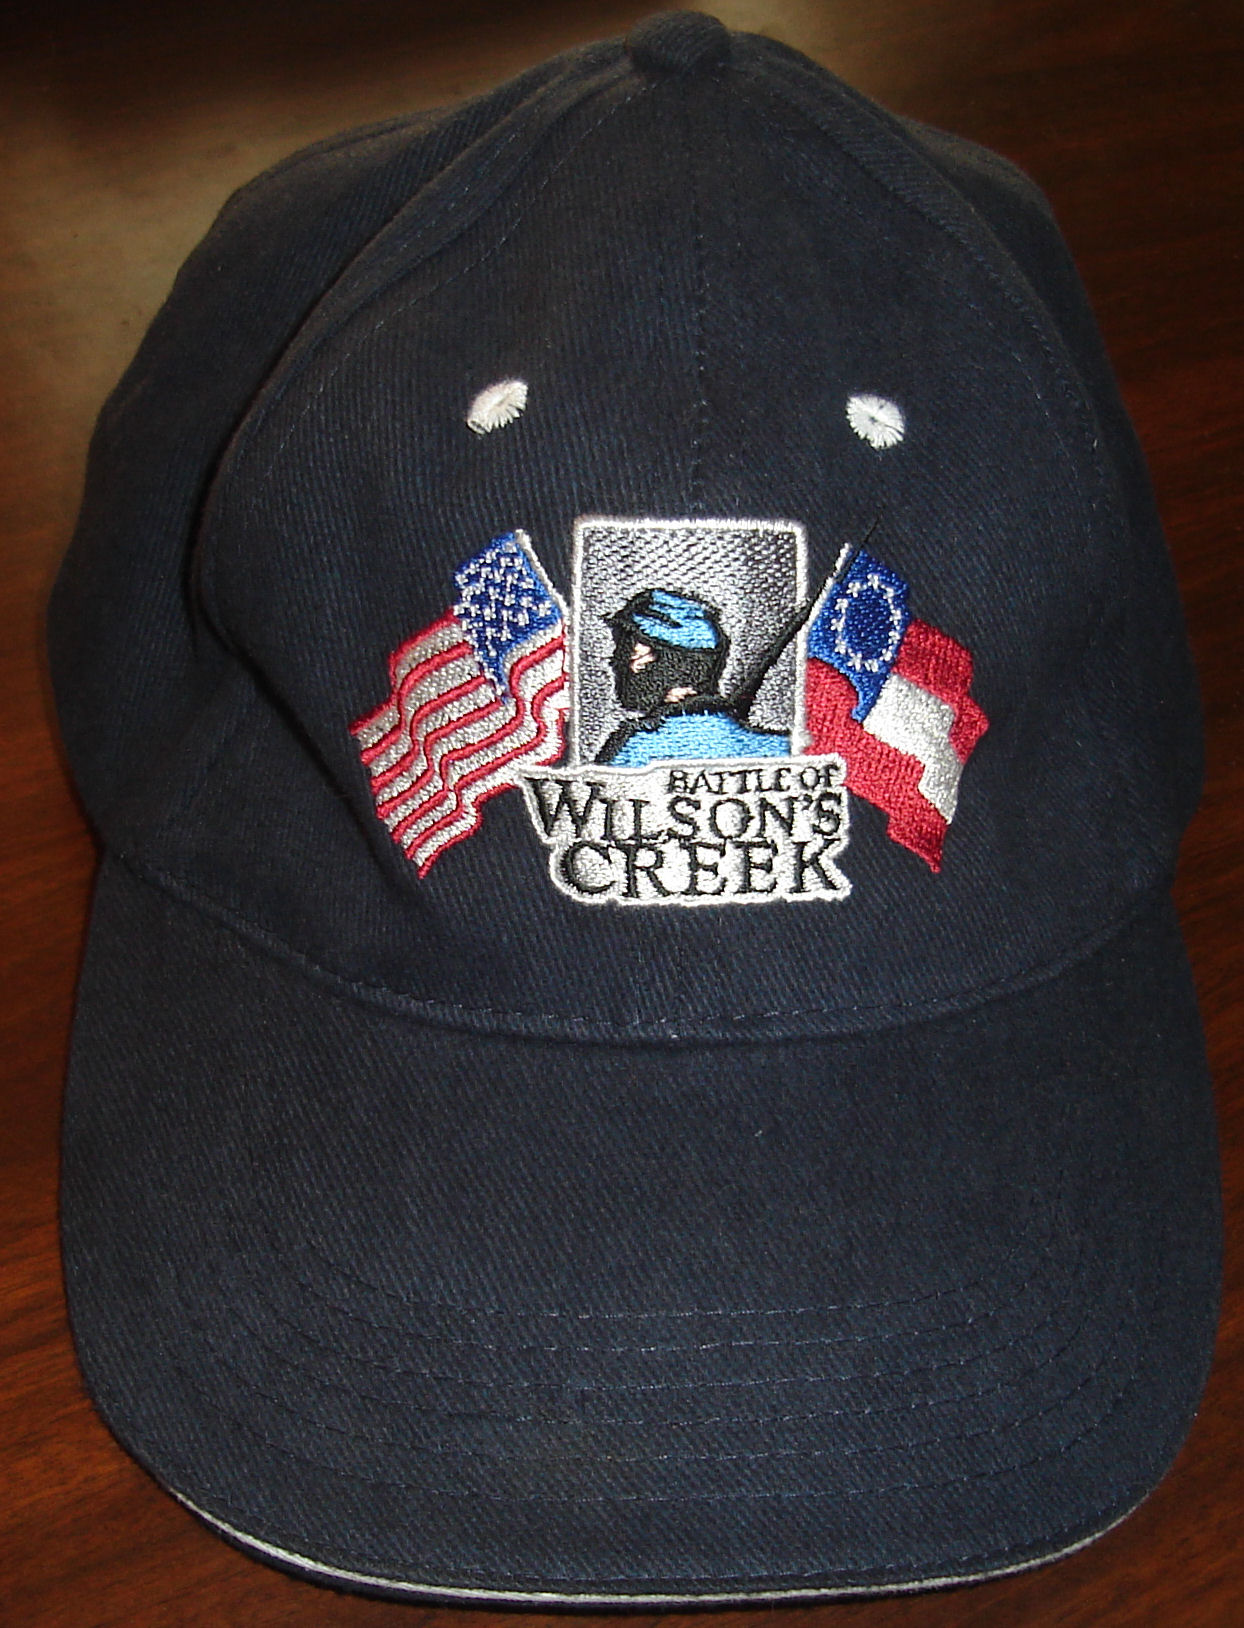 Wilson's Creek National Battlefield hat